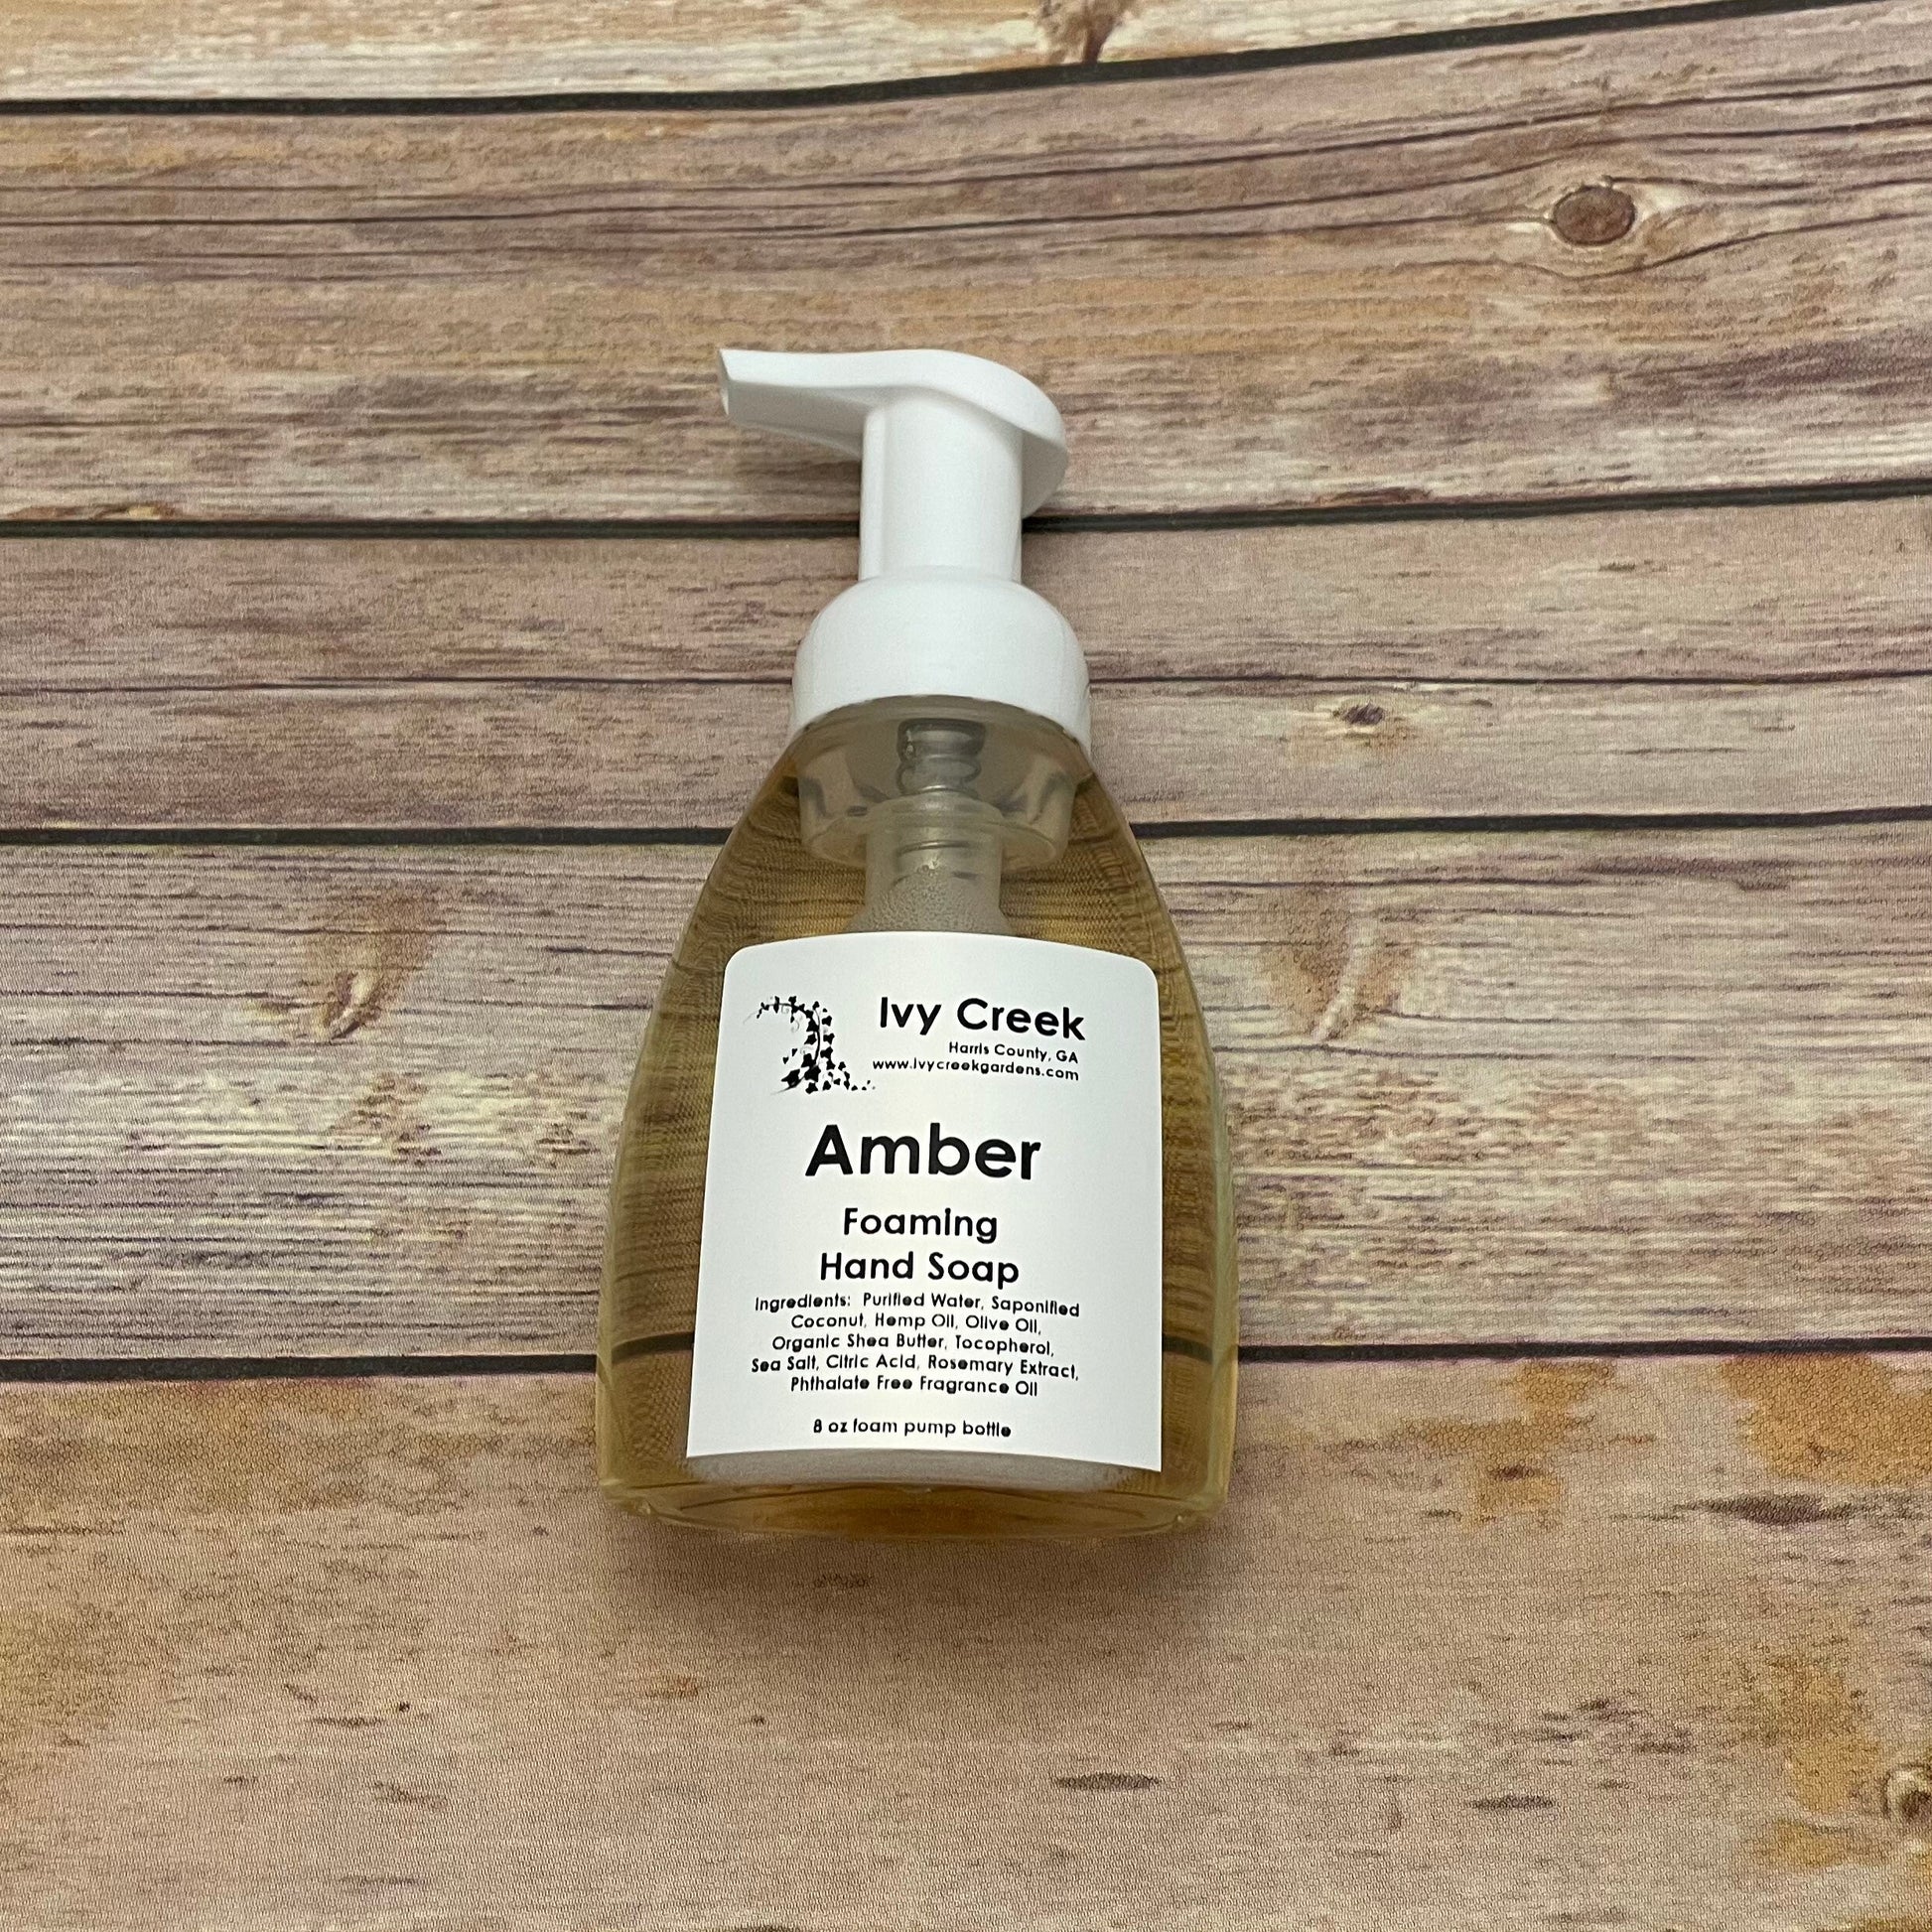 Ivy Creek Amber Foaming Hand Soap - Natural Hand Soap - 8 oz